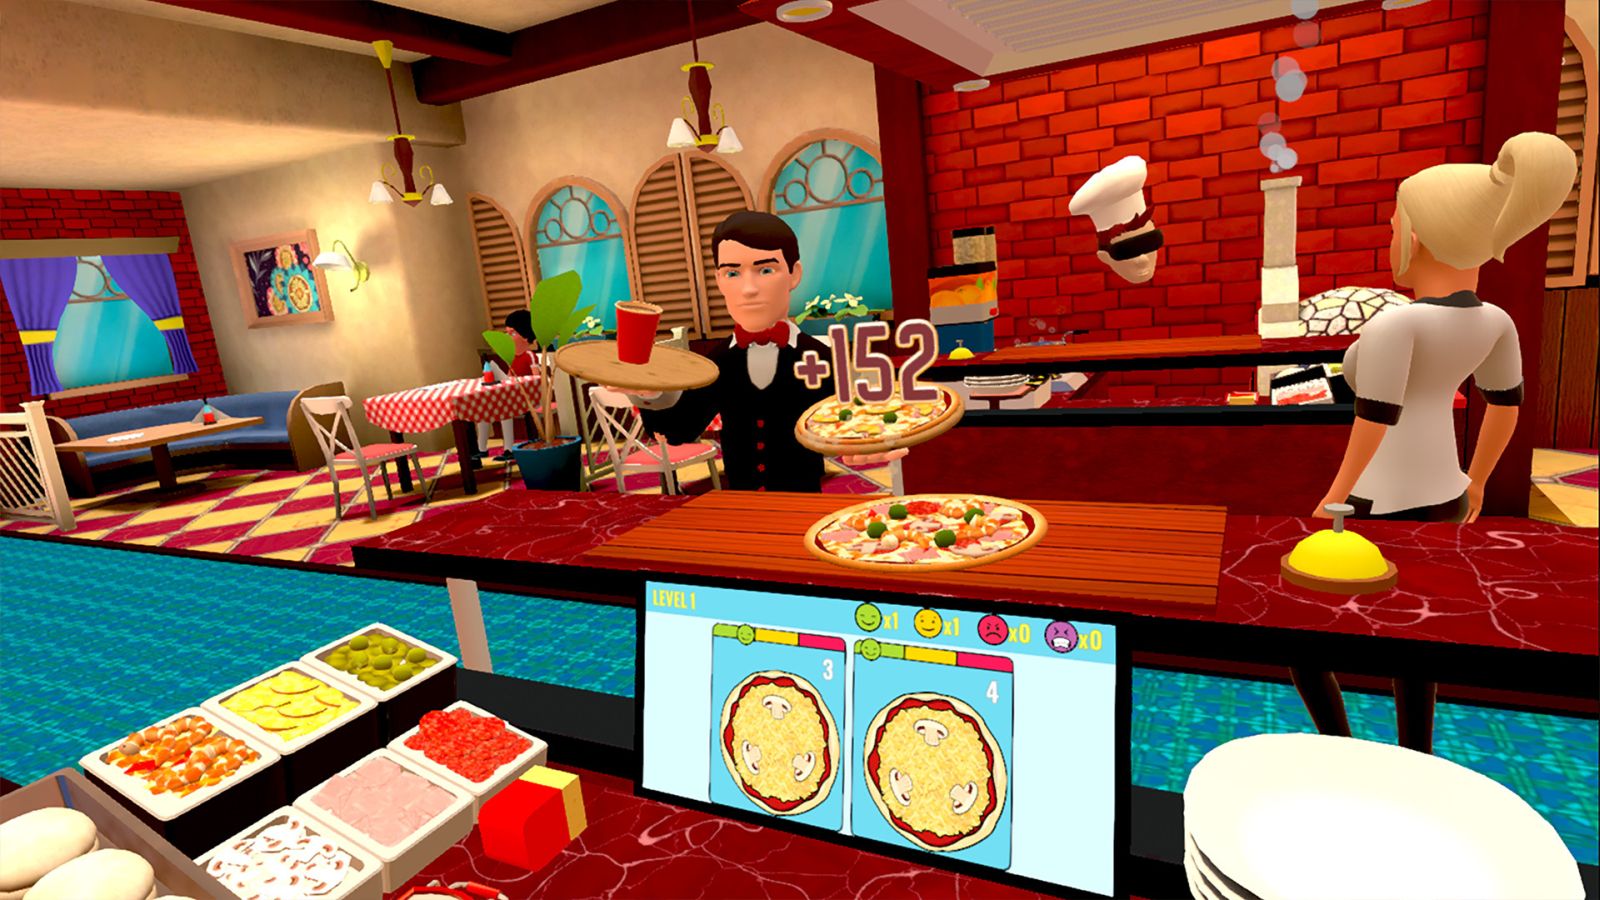 Cooking Simulator - Pizza  Xbox Launch Trailer 